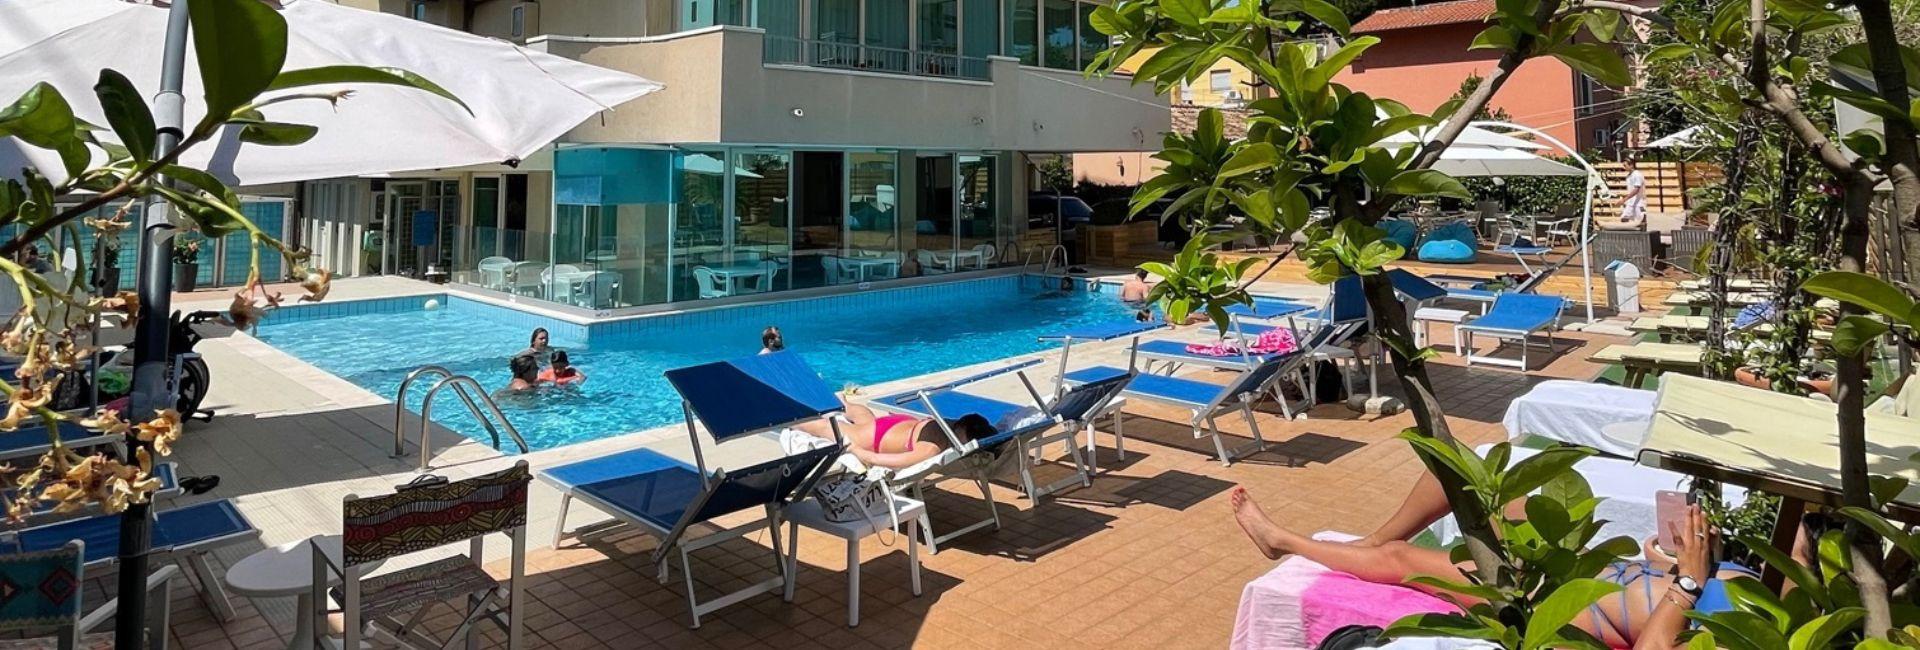 hotelapogeo it piscina 007